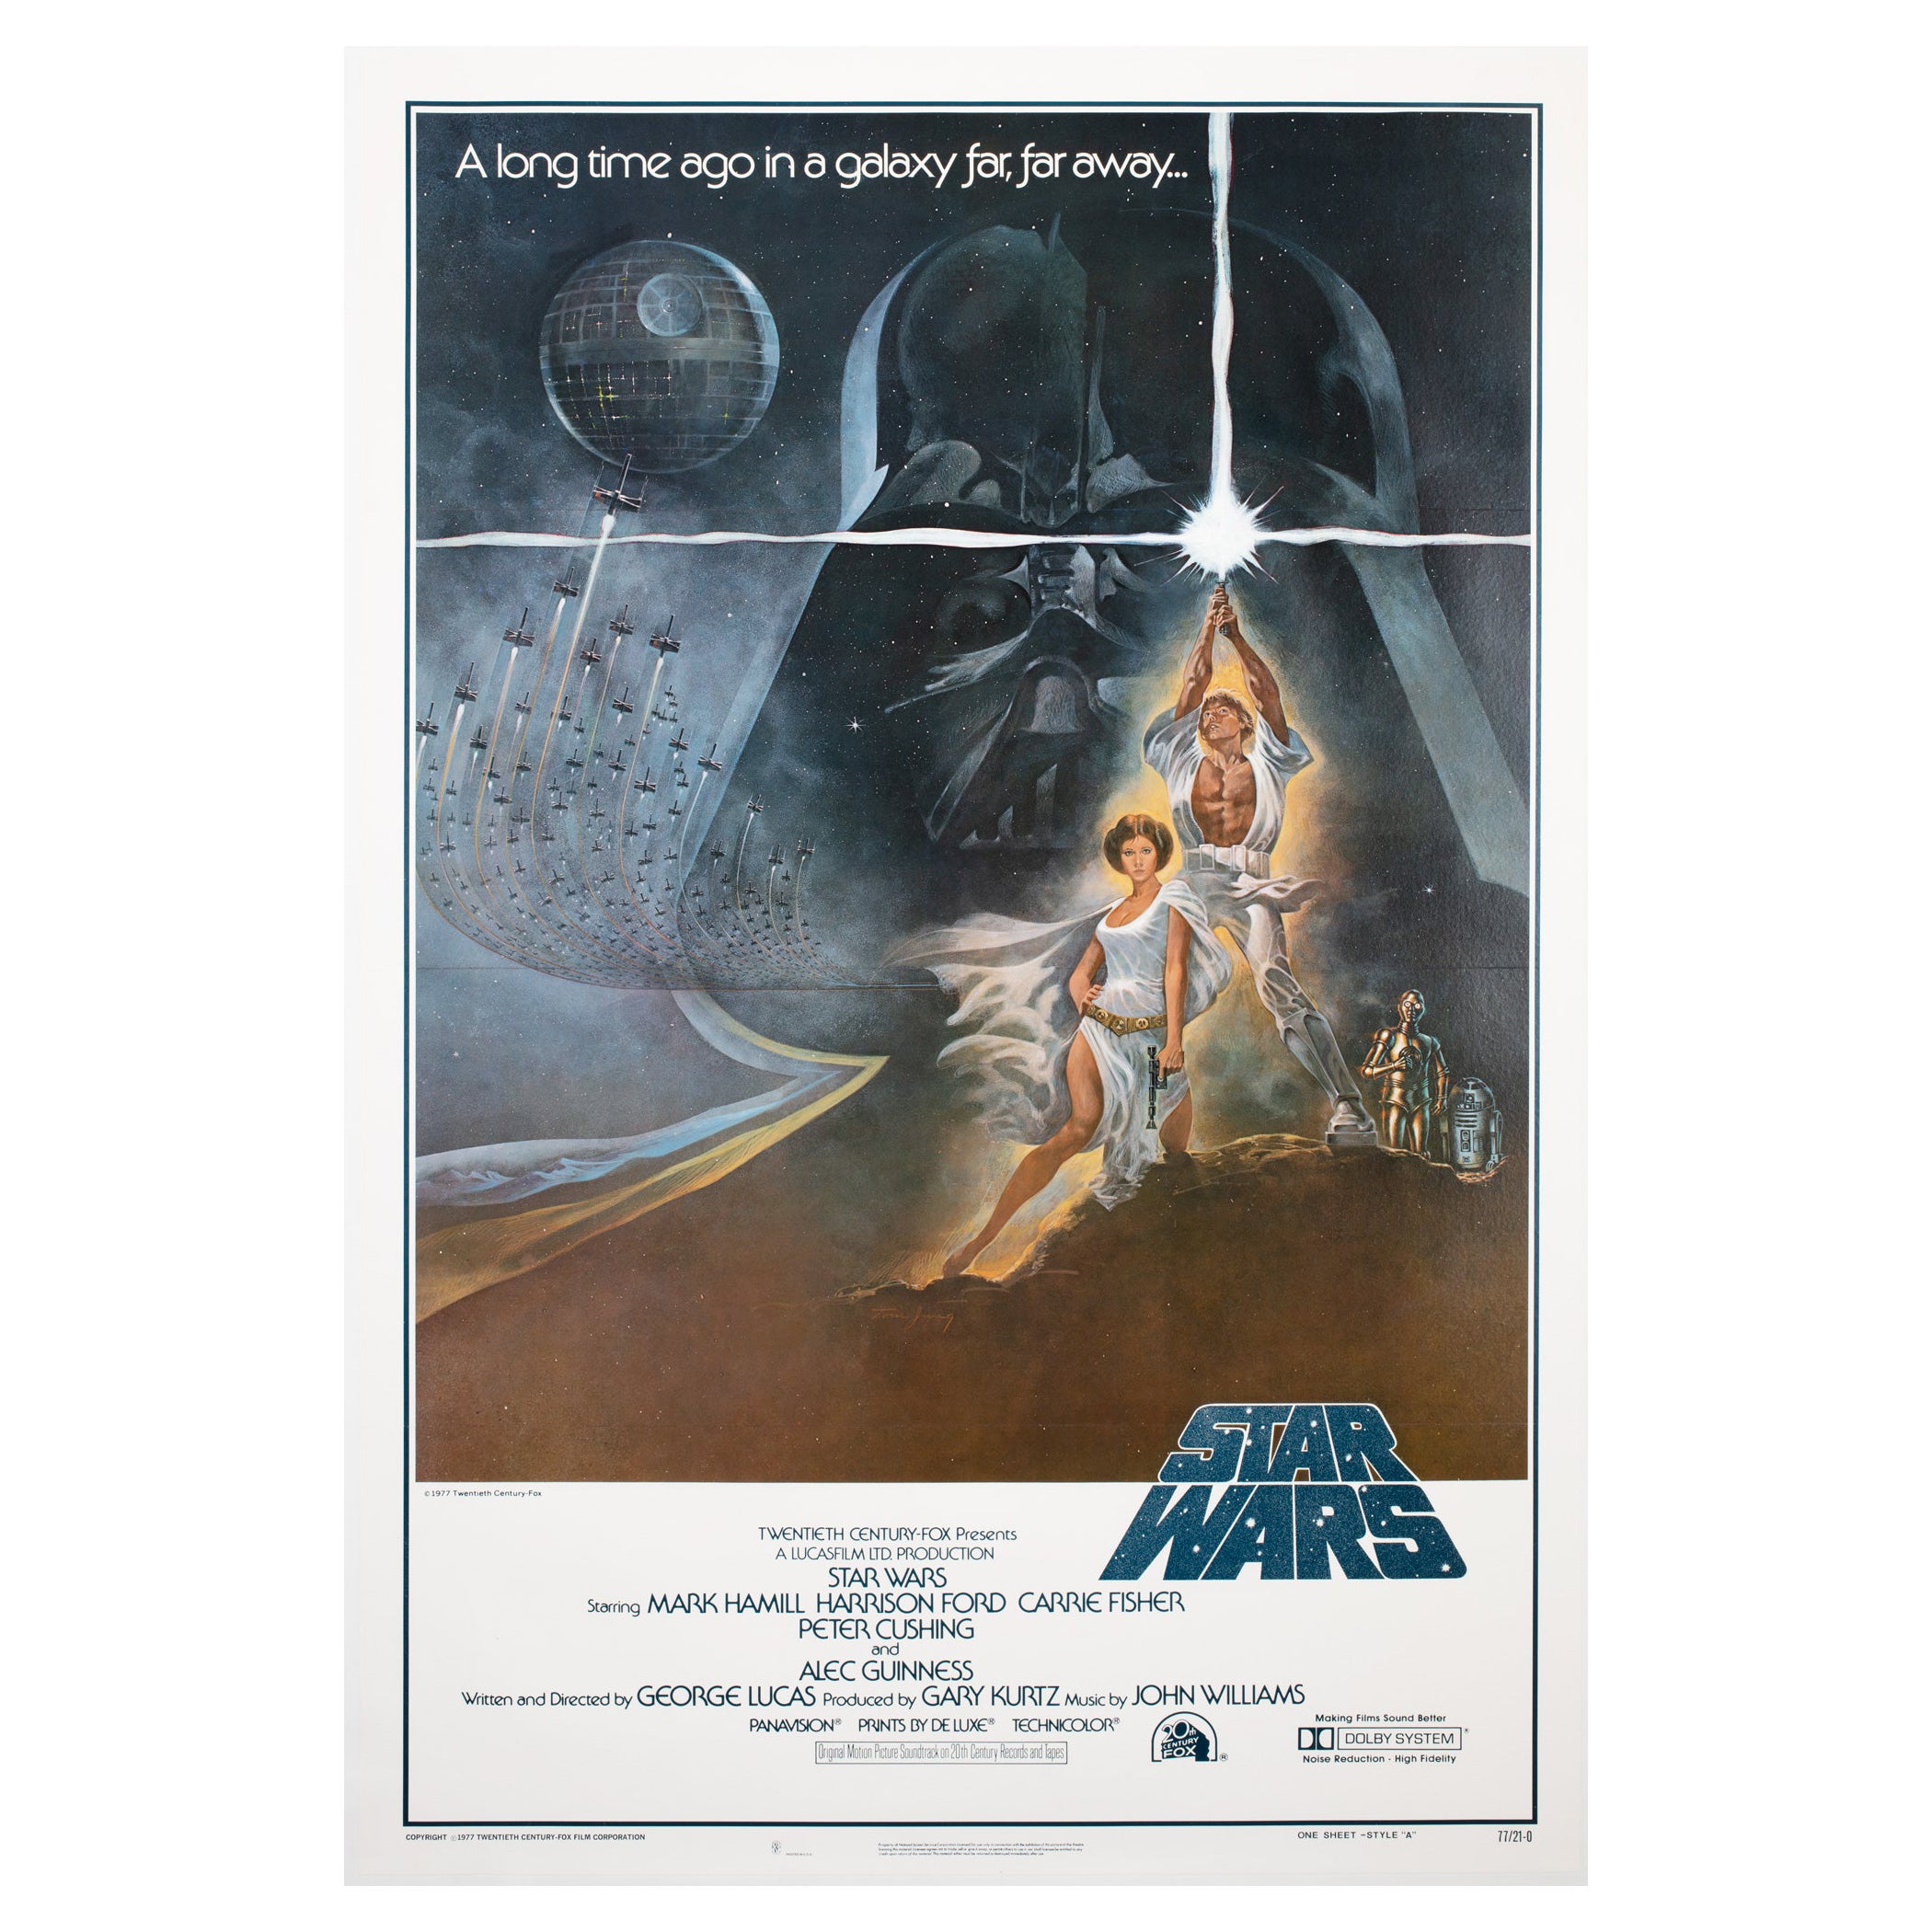 STAR WARS 1977 International US Film Movie Poster, 1st Printing, Jung